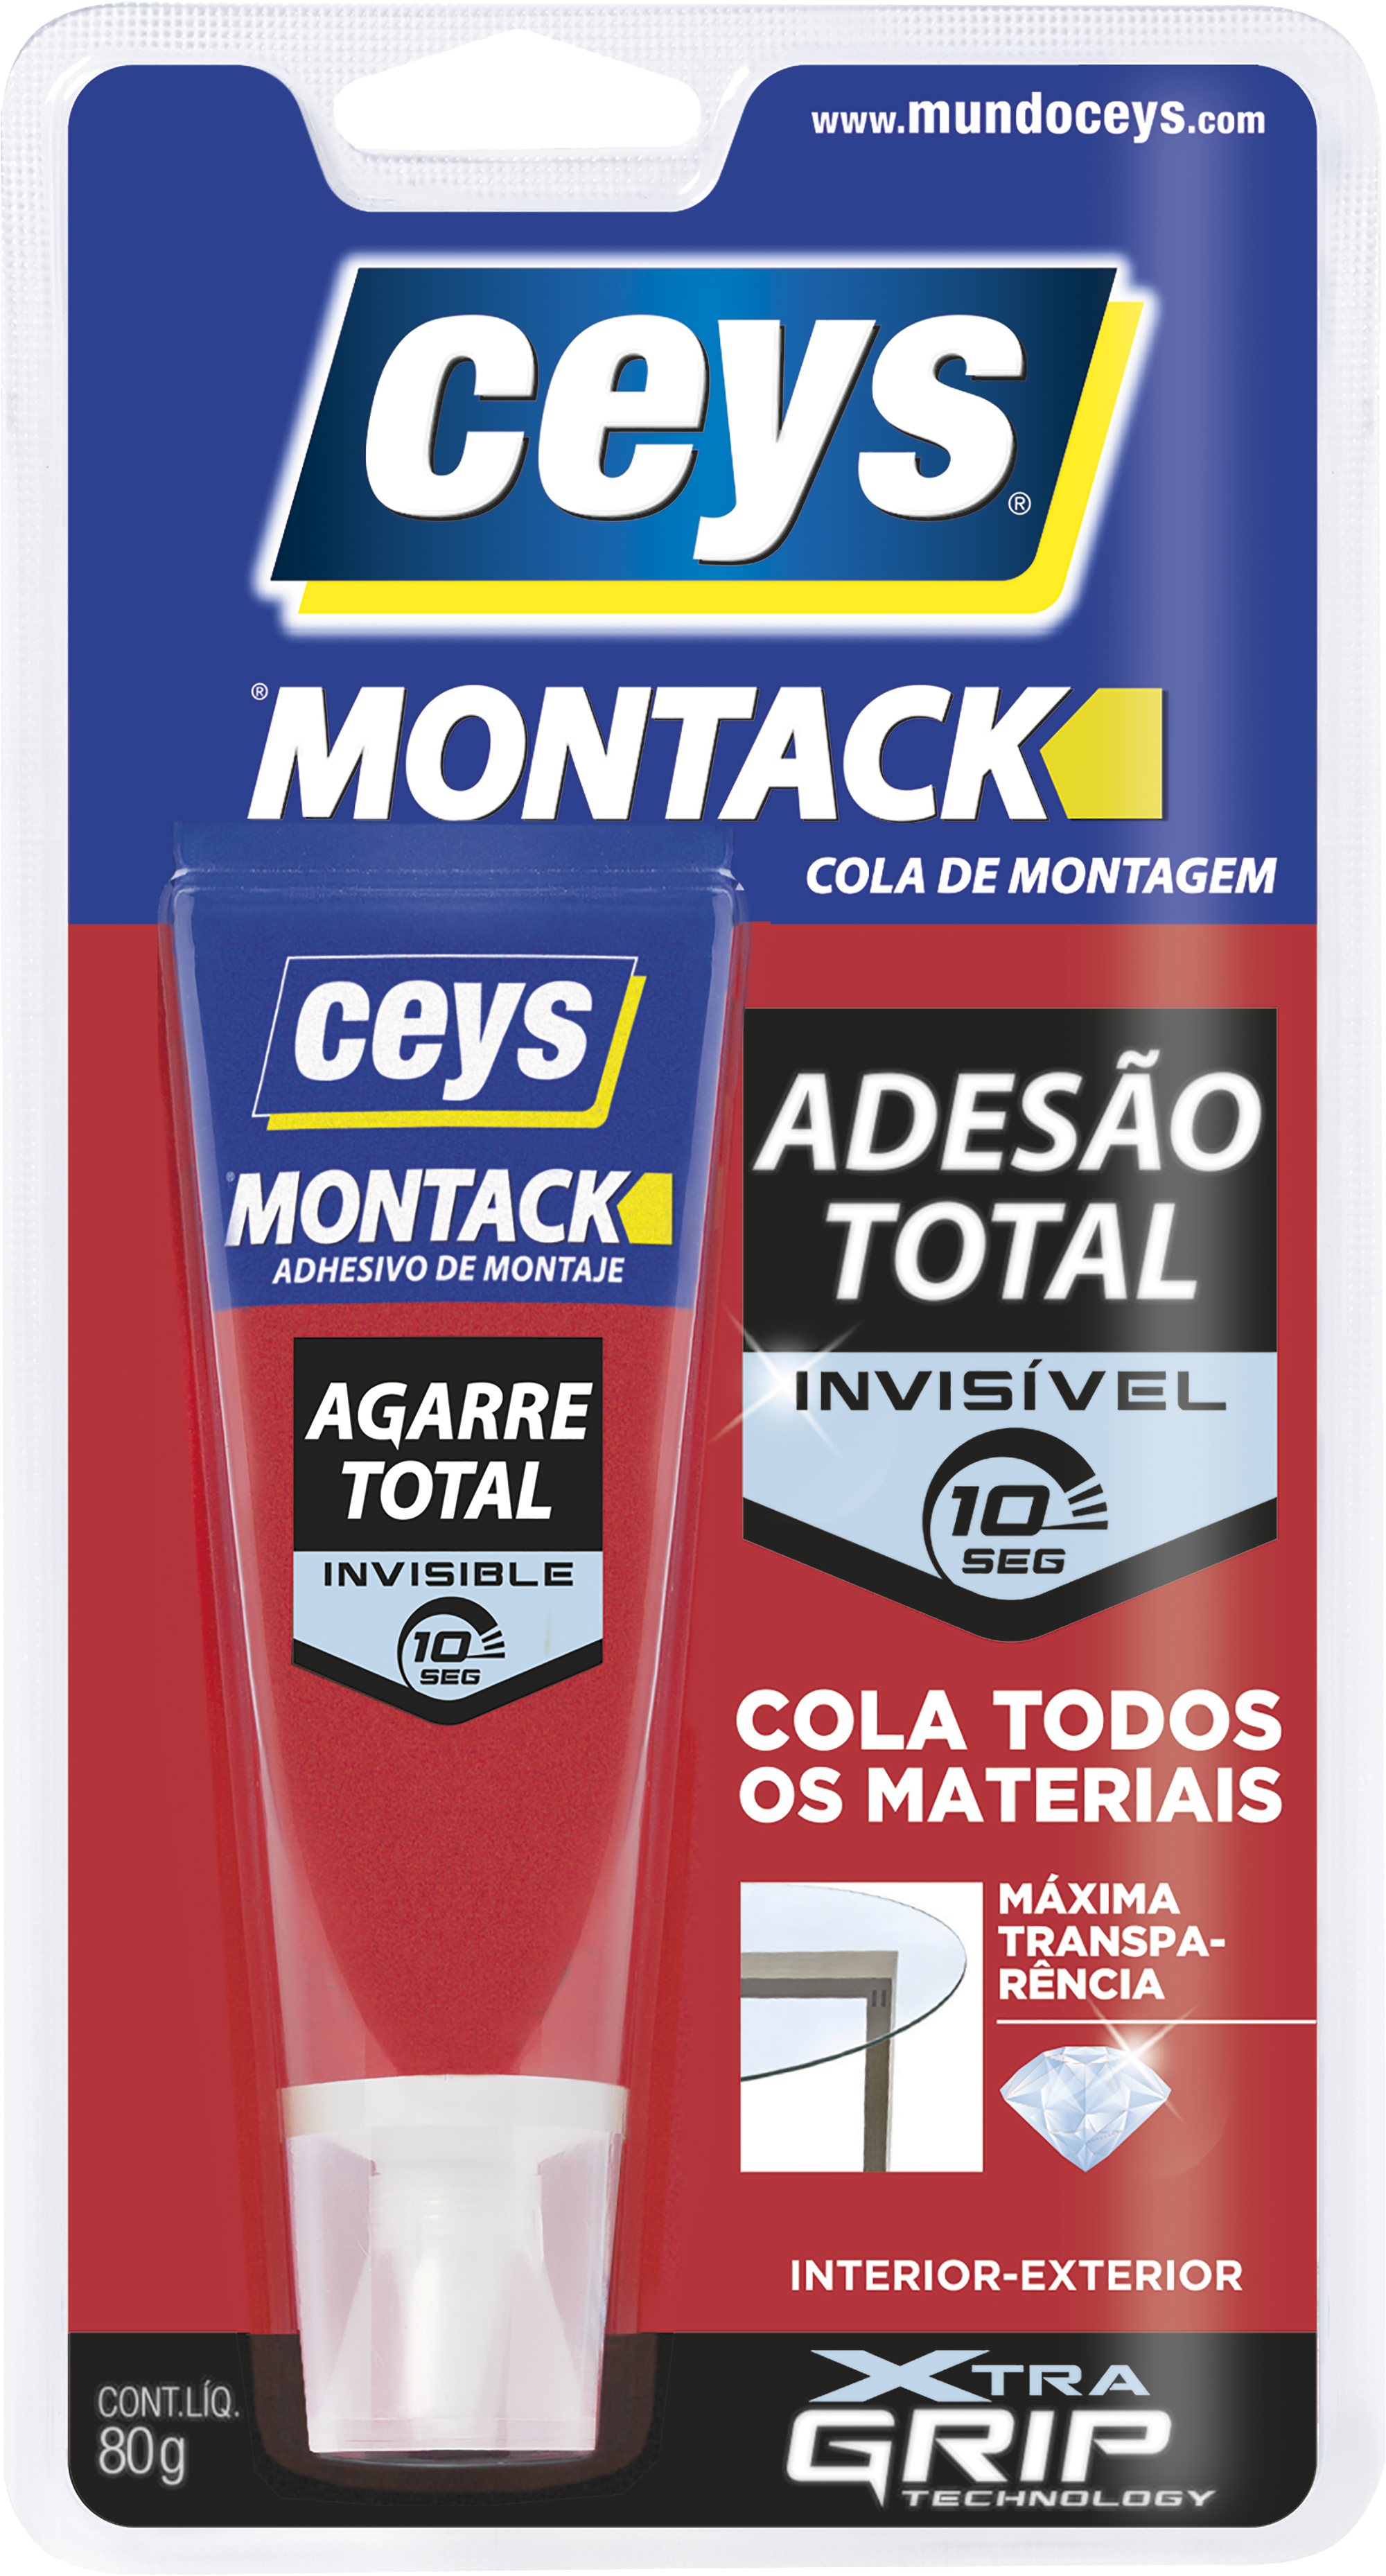 Adhesivo de montaje Montack Xpress Ceys 100ml